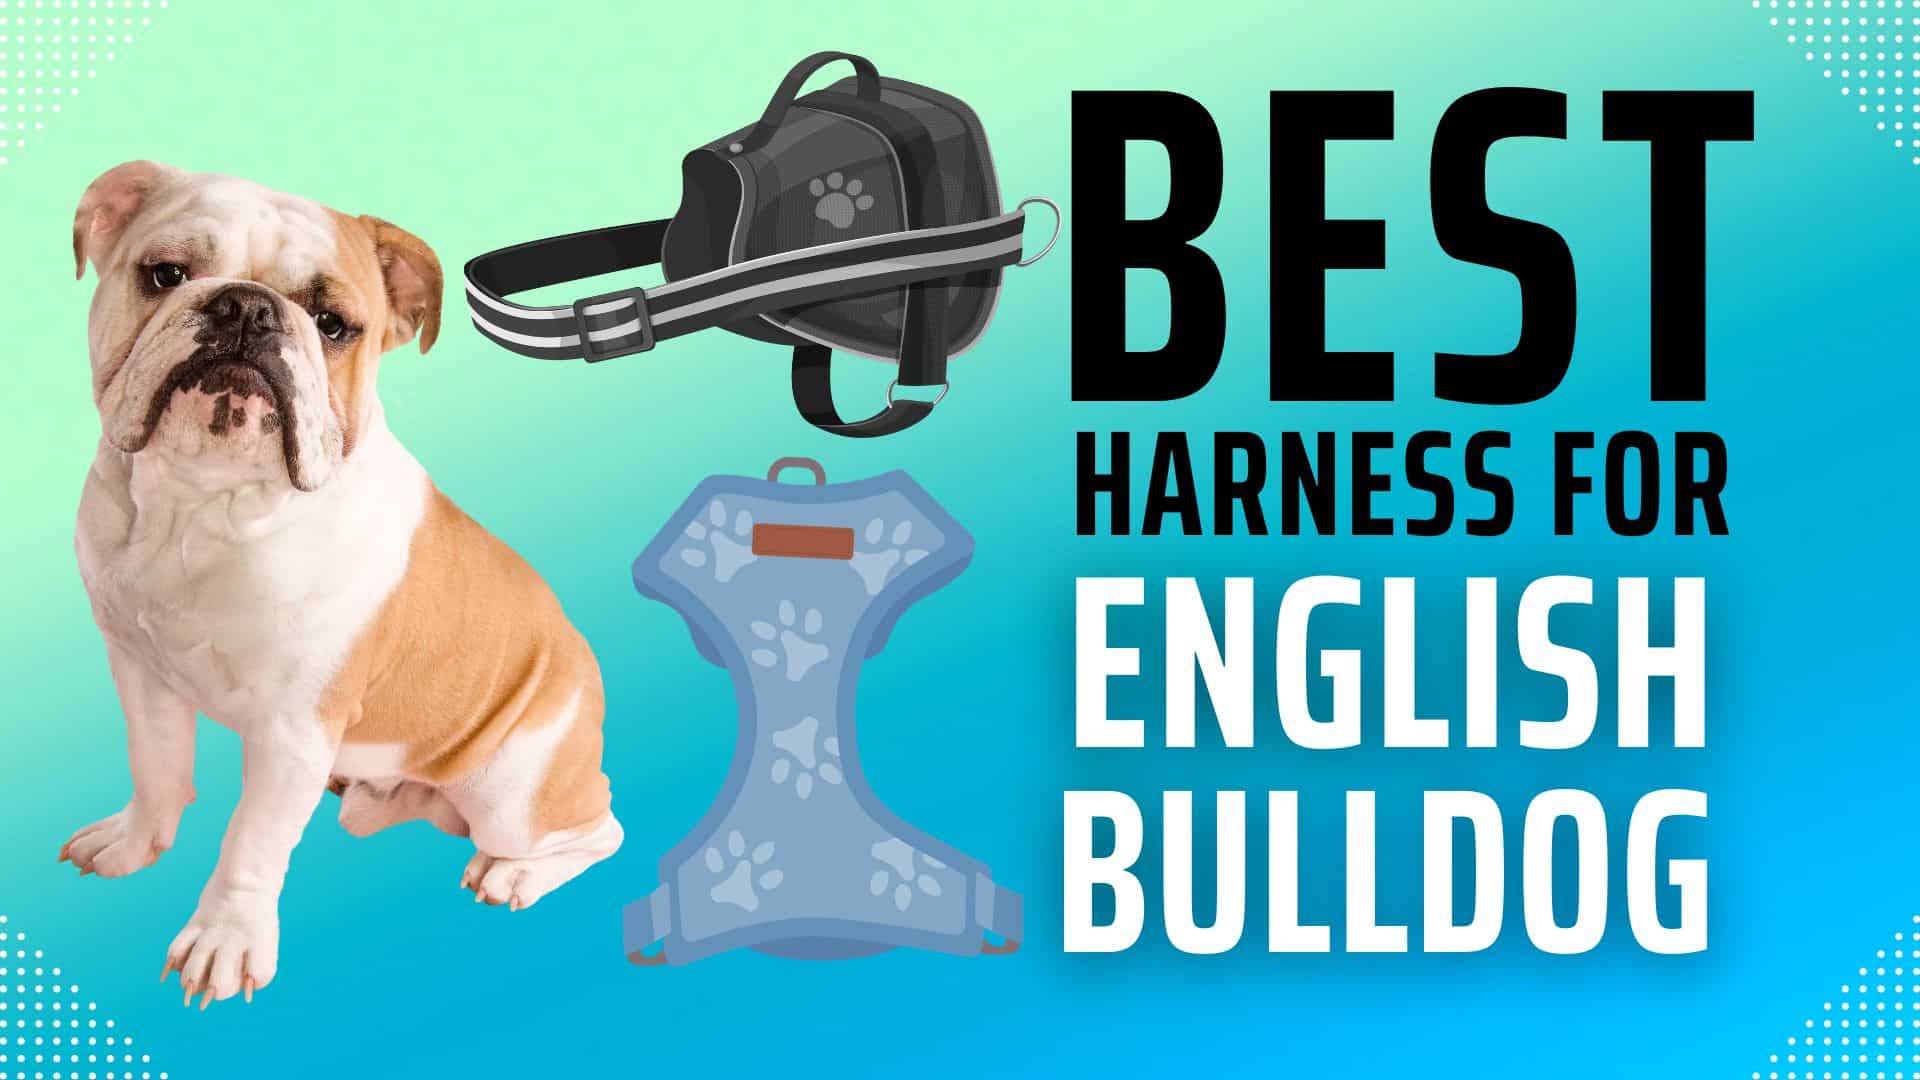 Best bulldog harnesses picture